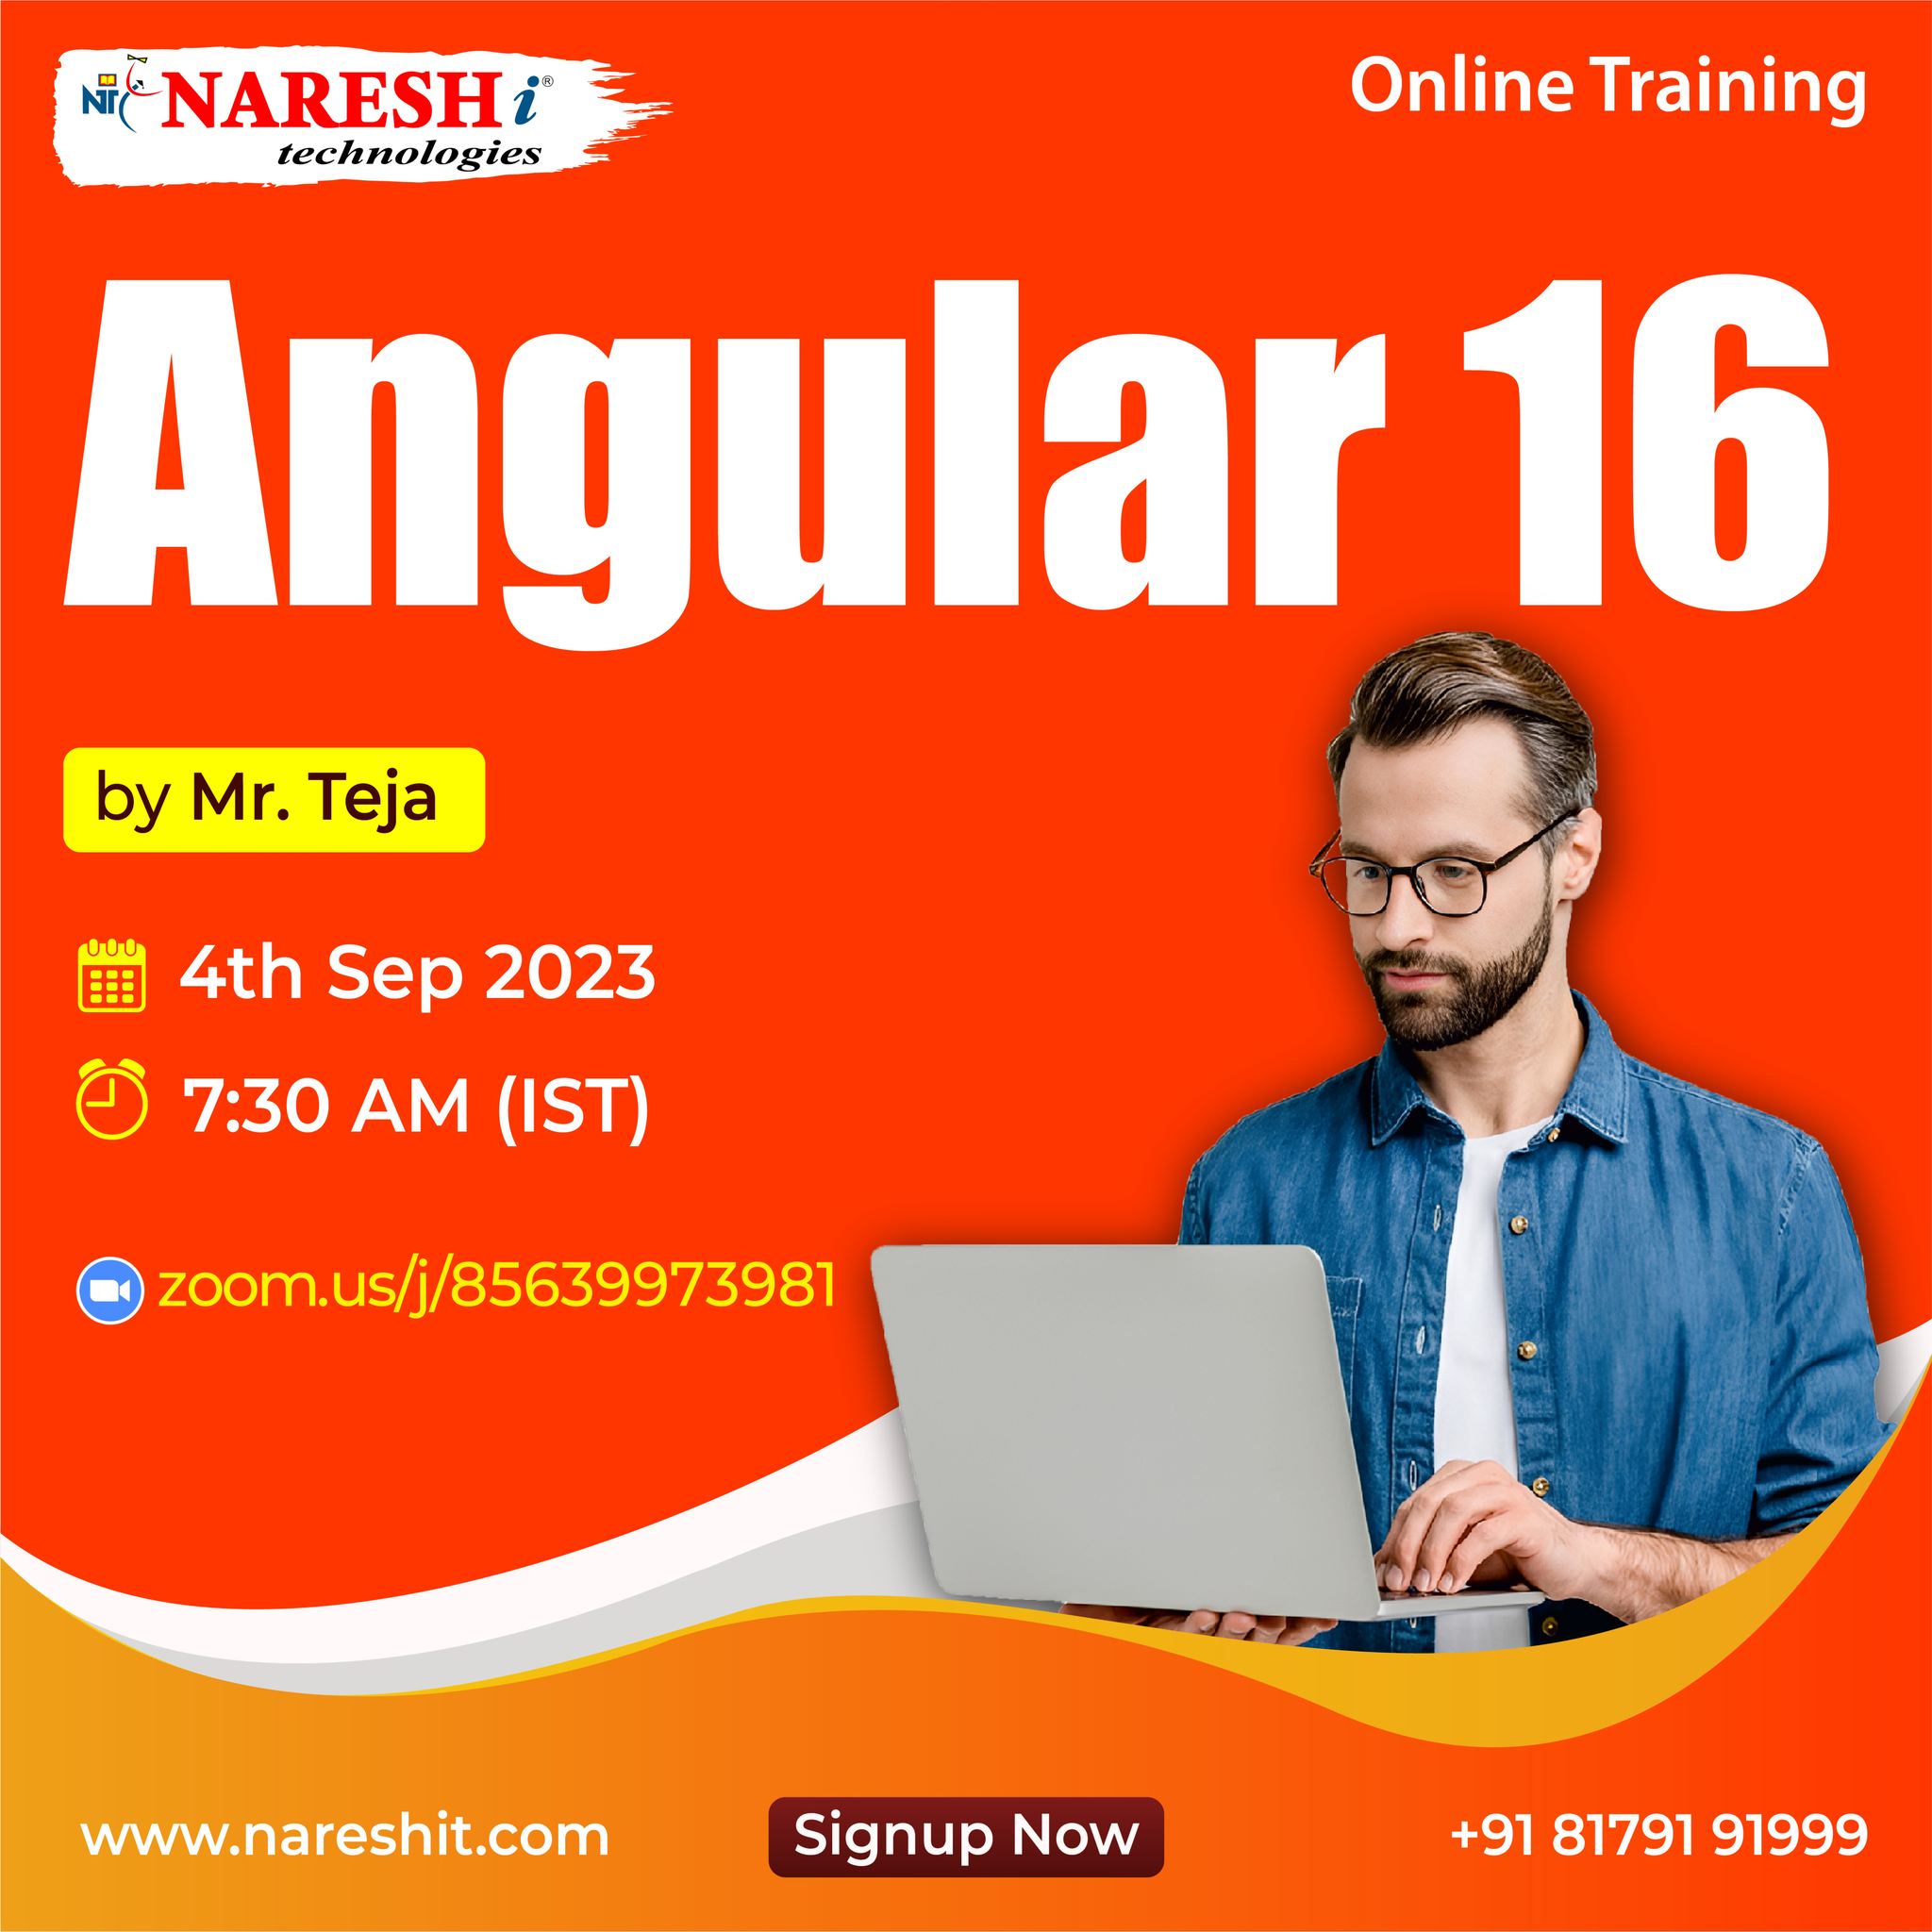 Free Online Demo On Angular 16 - Naresh IT, Online Event